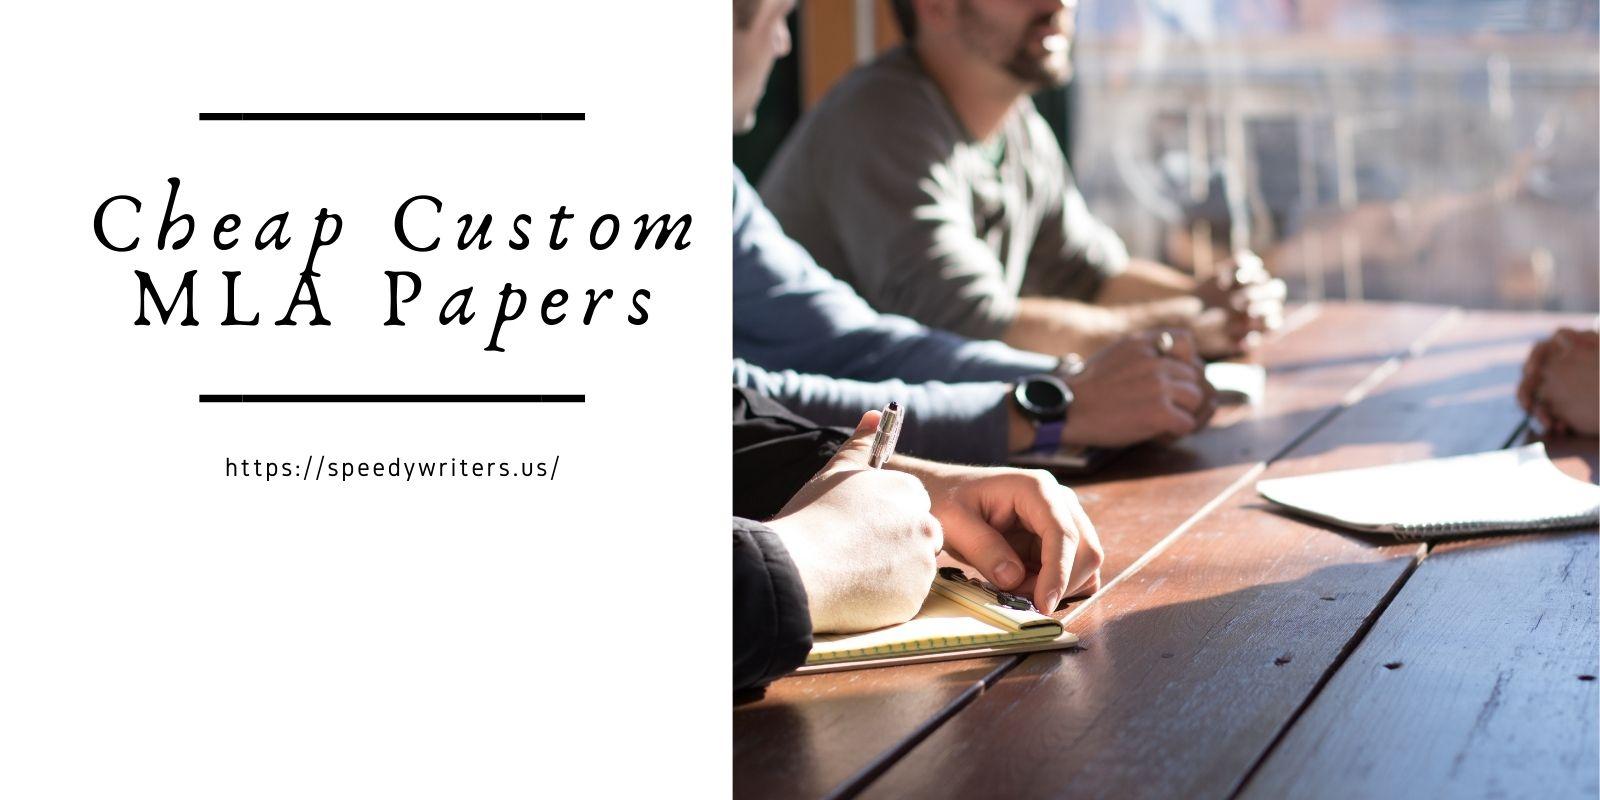 Cheap Custom MLA Papers